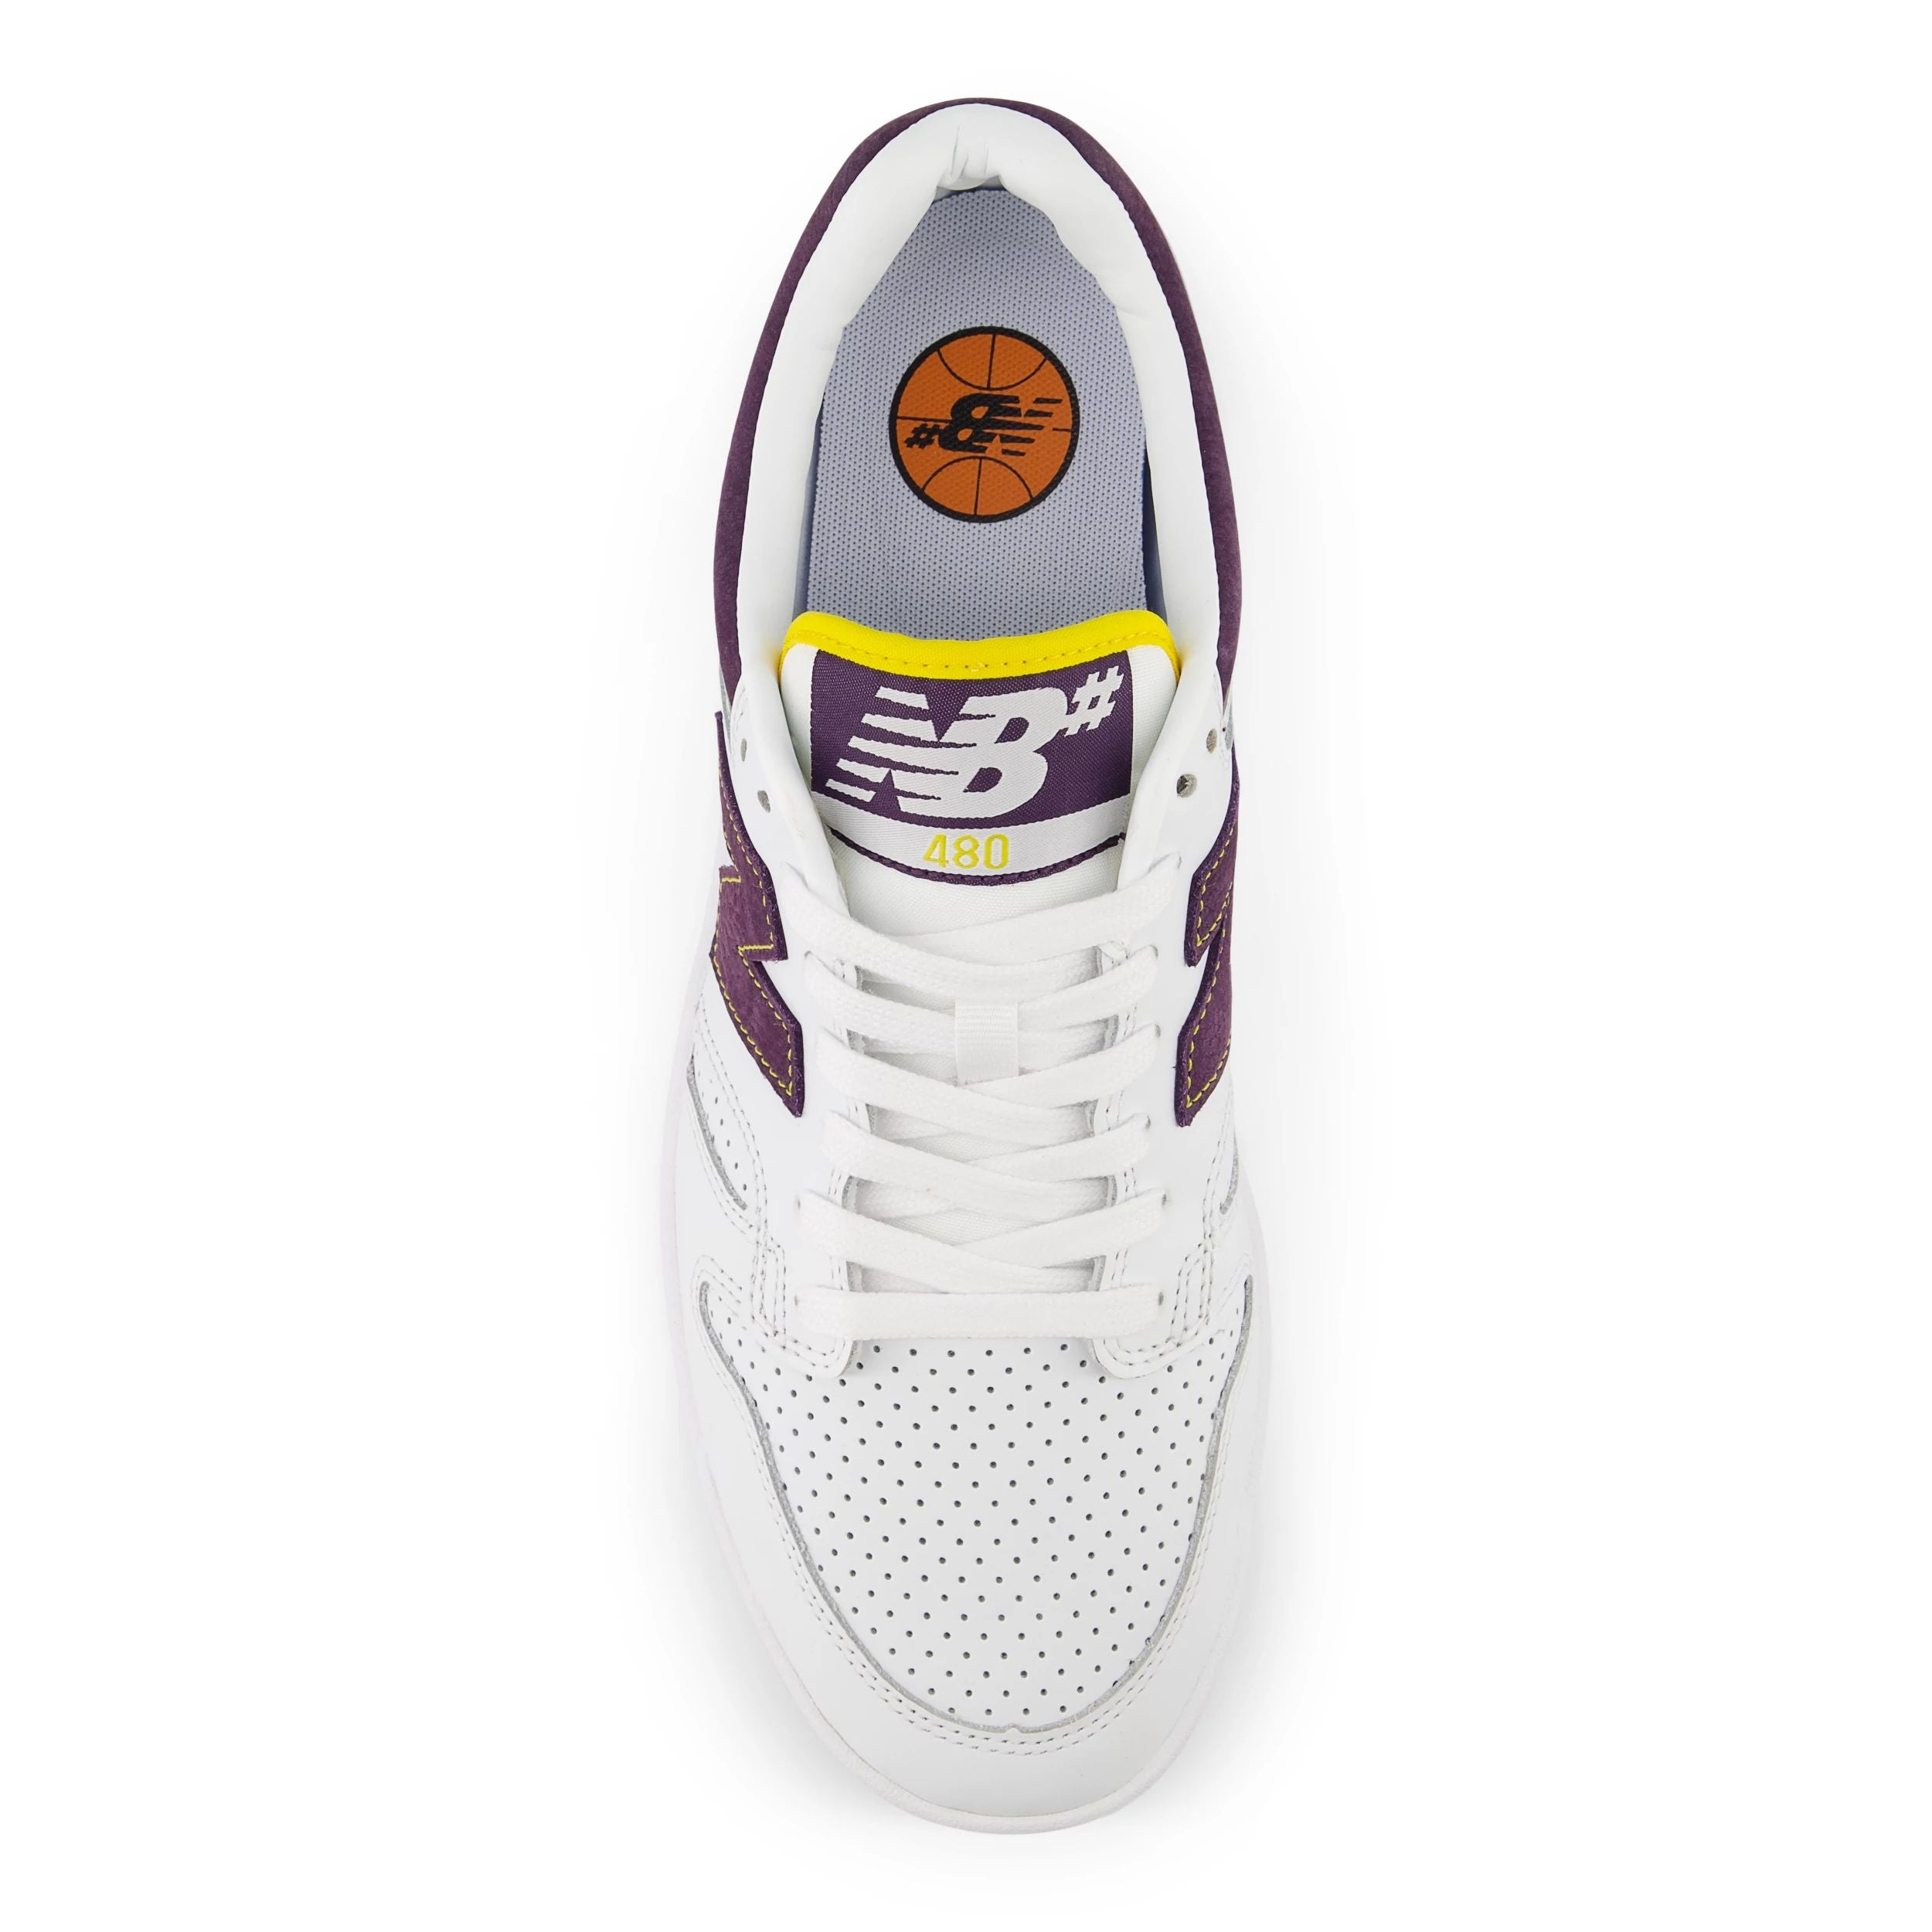 White 480 New Balance Skate Shoe Top